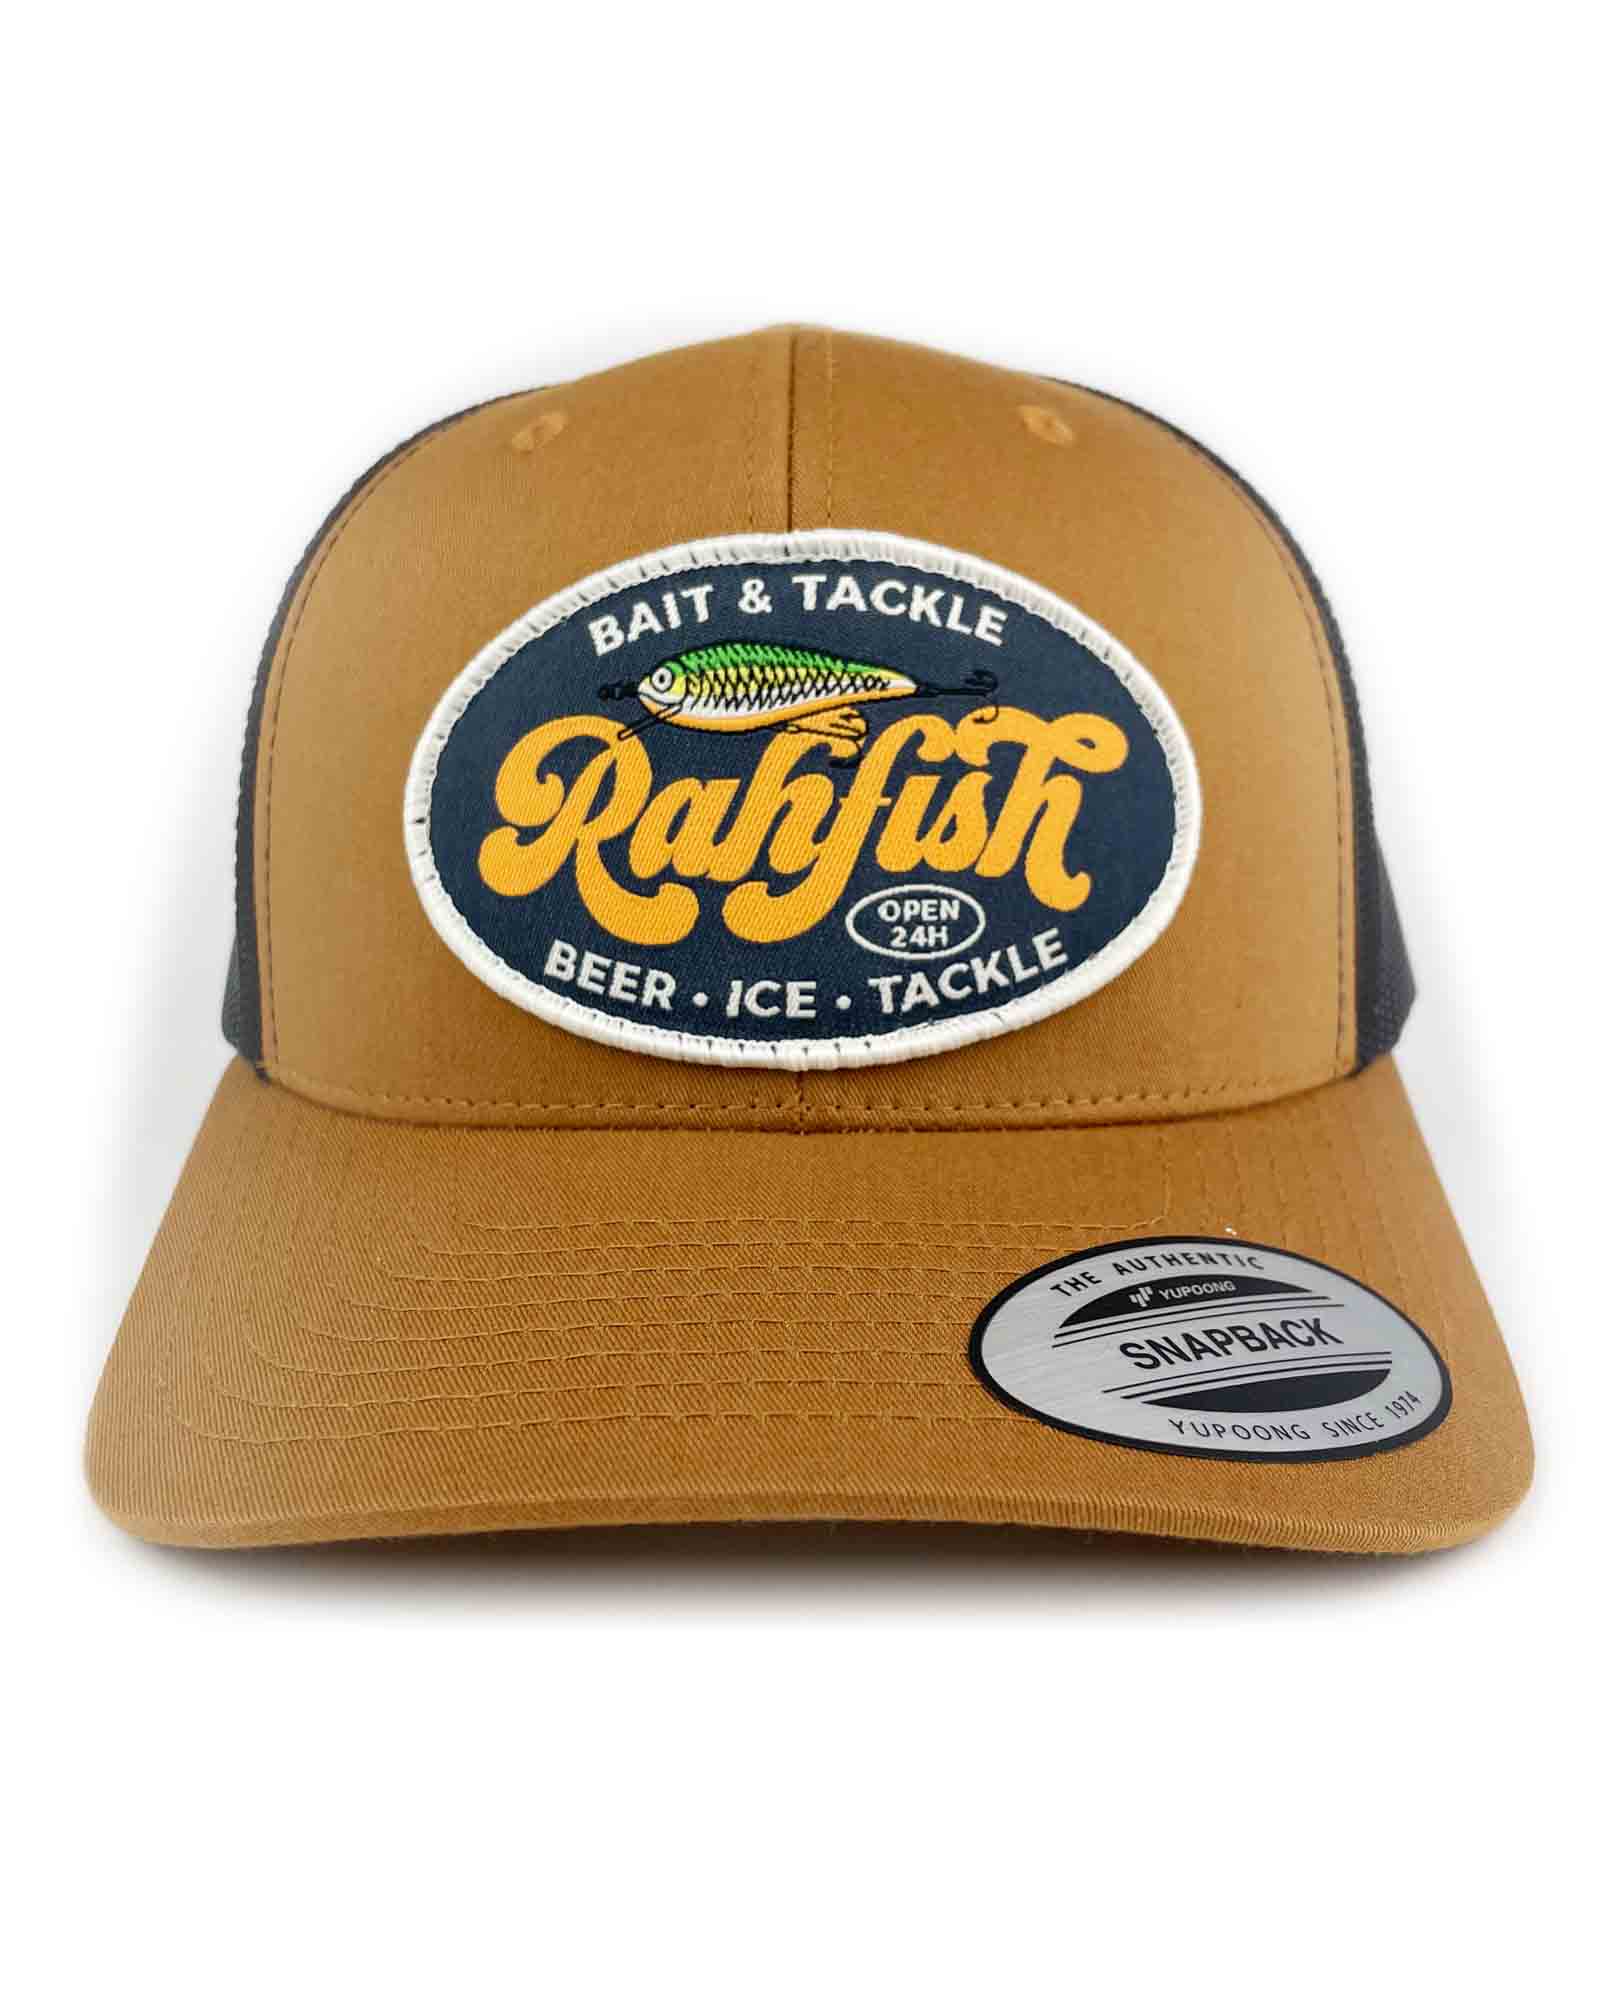 RAHFISH BEER ICE TACKLE TRUCKER HAT